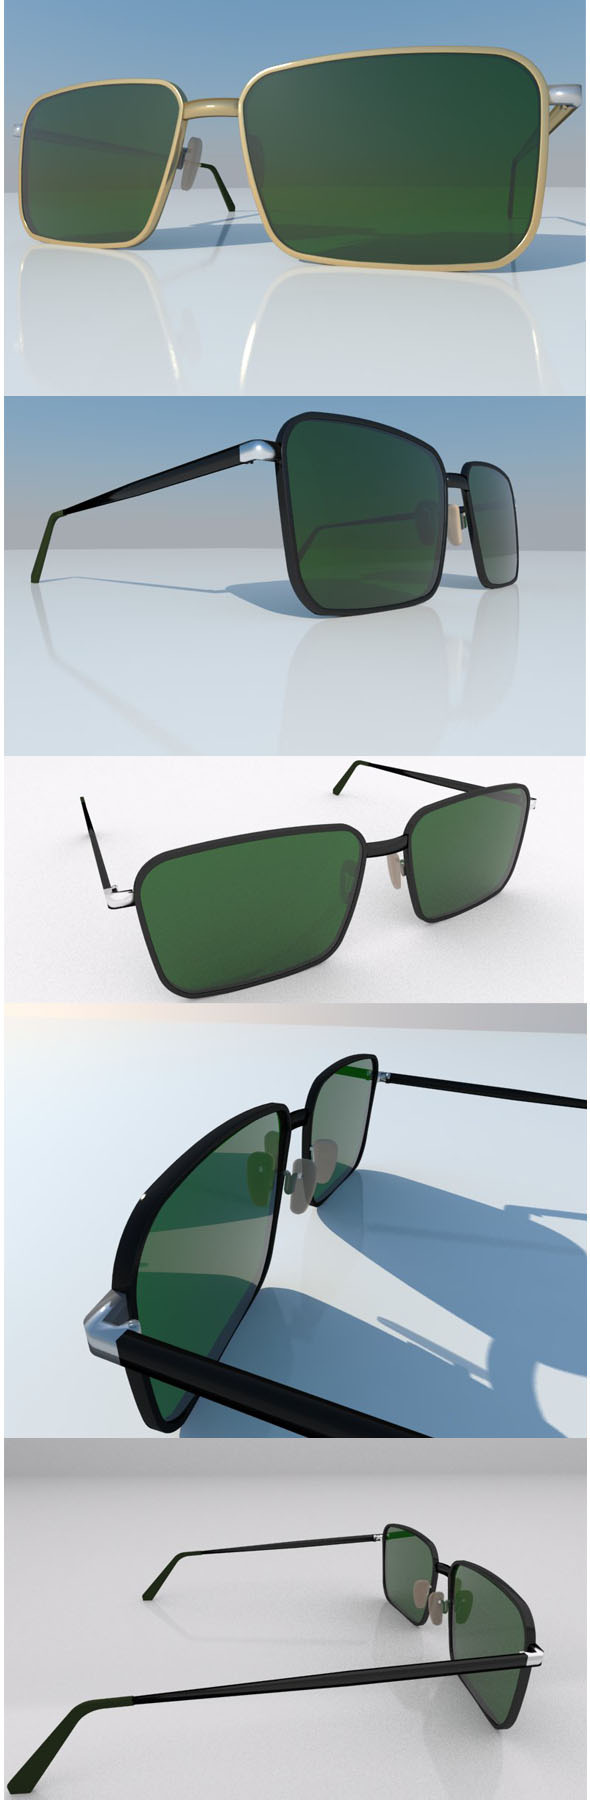 spectacles eyeglasses sunglasses - 3Docean 12706788